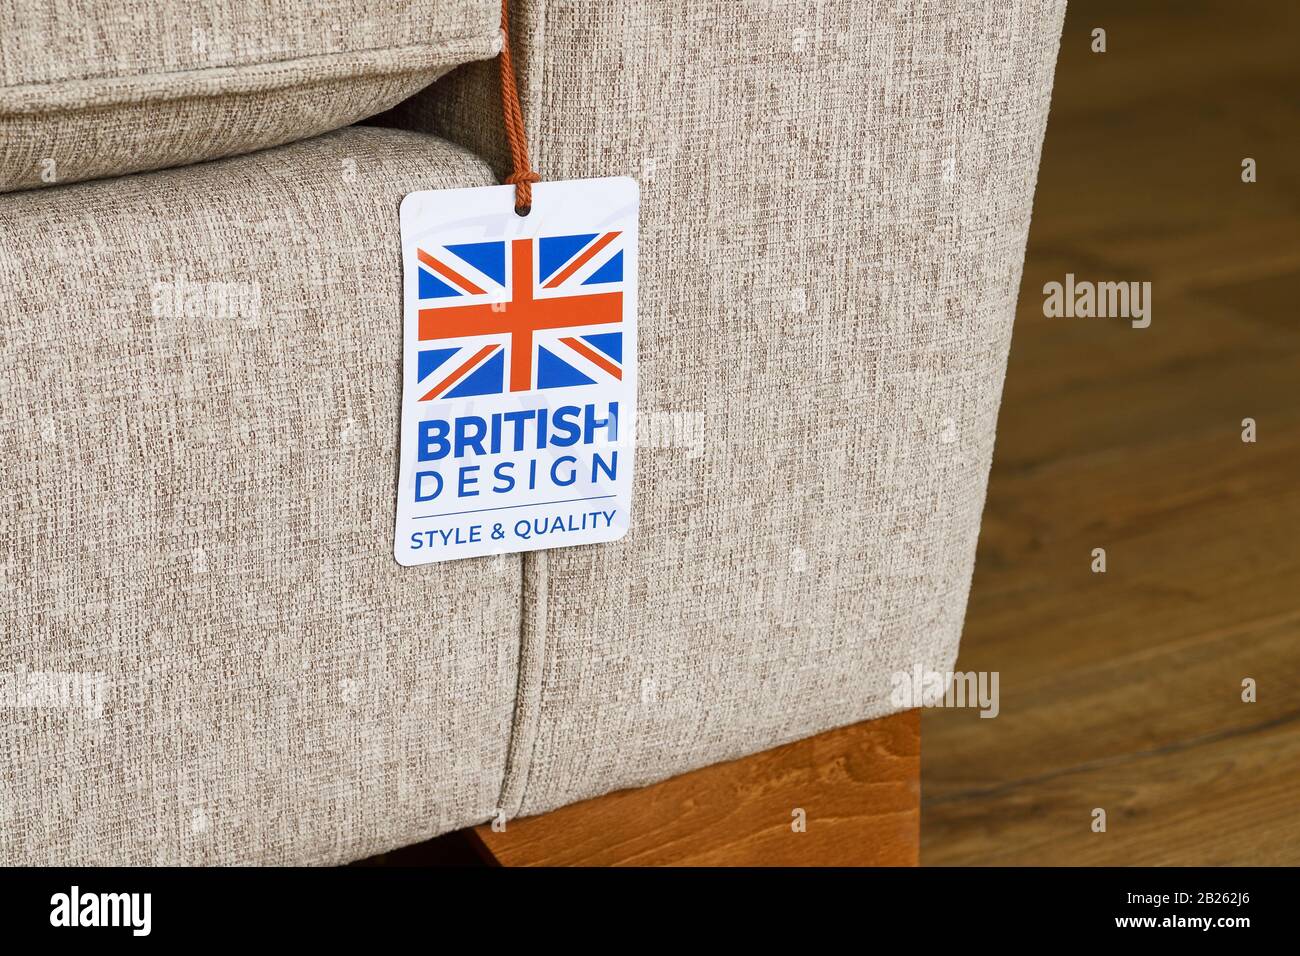 A British Design label on a sofa Stock Photo